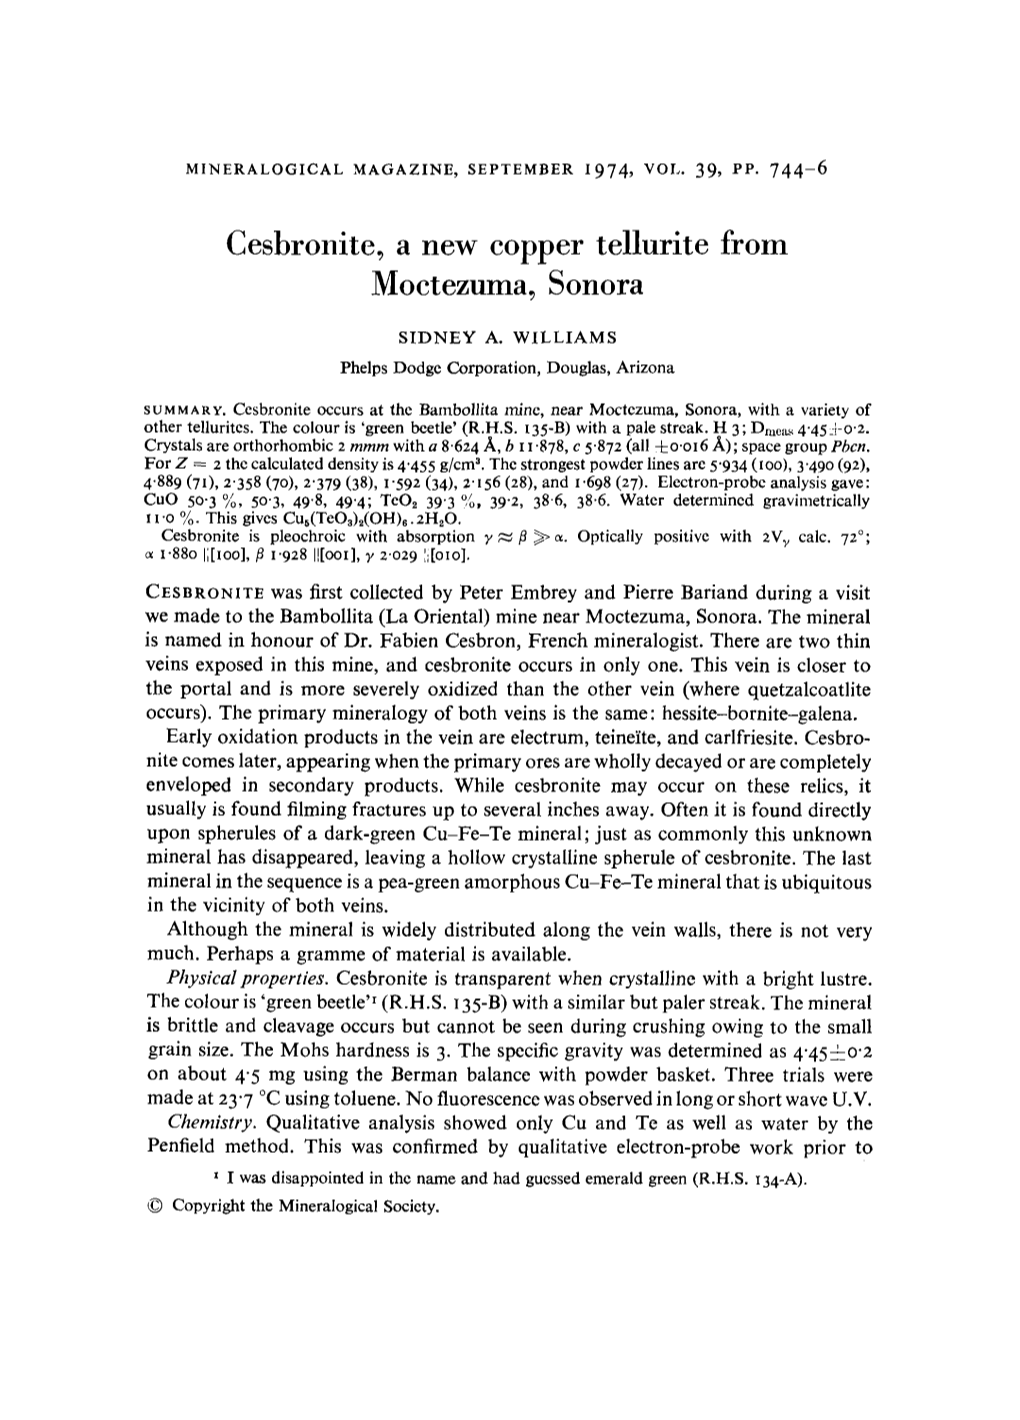 Cesbronite, a New Copper Tellurite from Moctezuma, Sonora